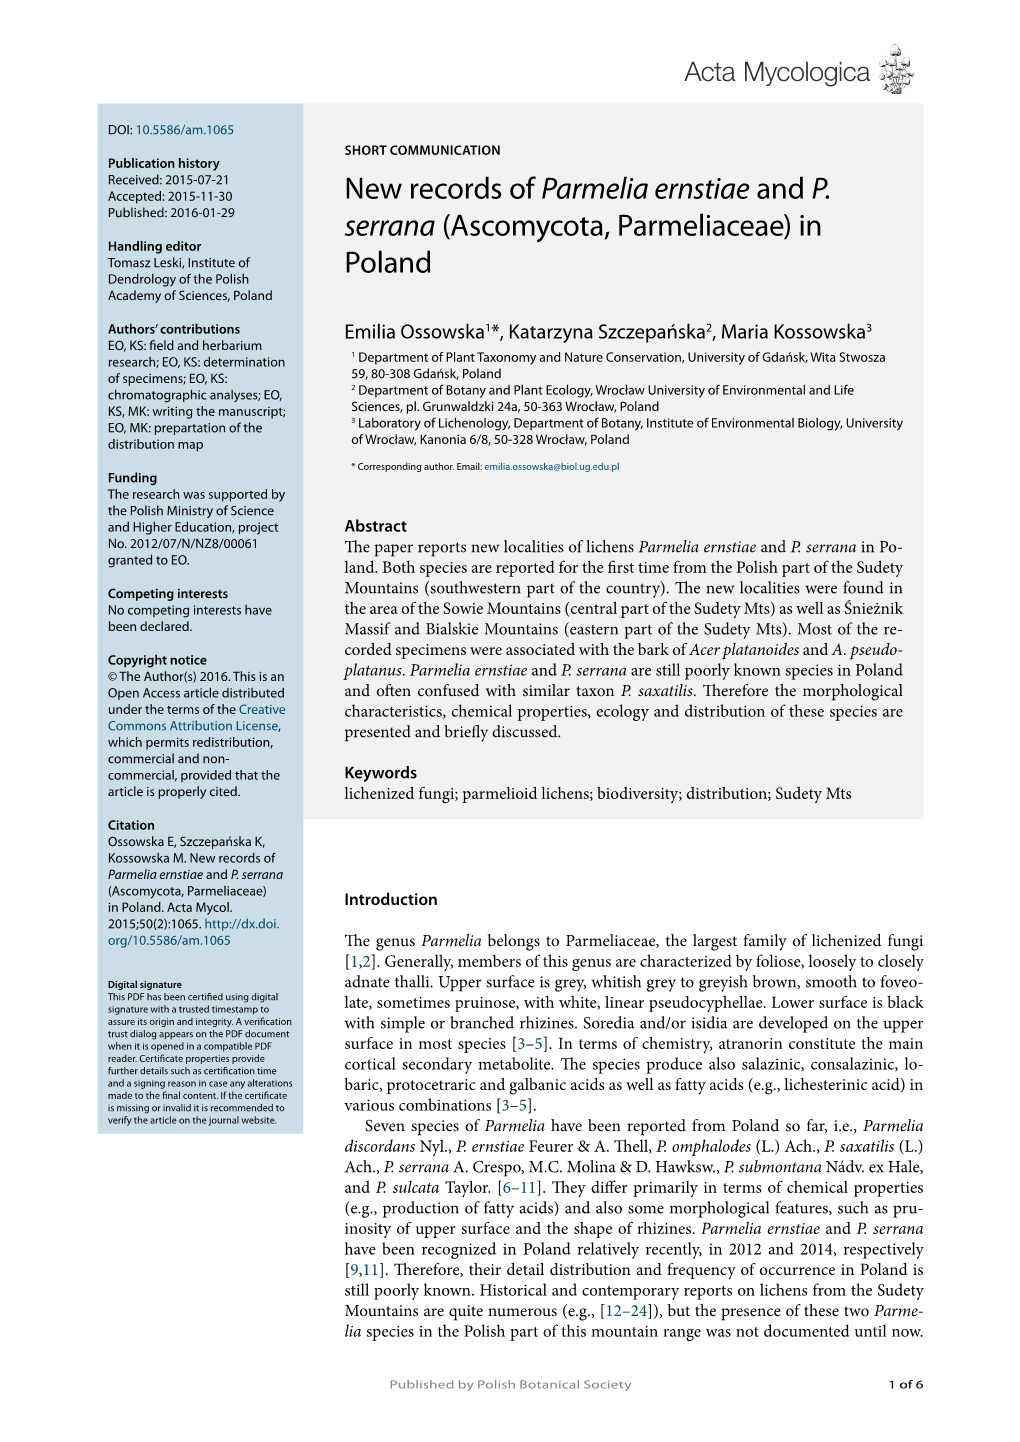 New Records of Parmelia Ernstiae and P. Serrana (Ascomycota, Parmeliaceae) in Poland